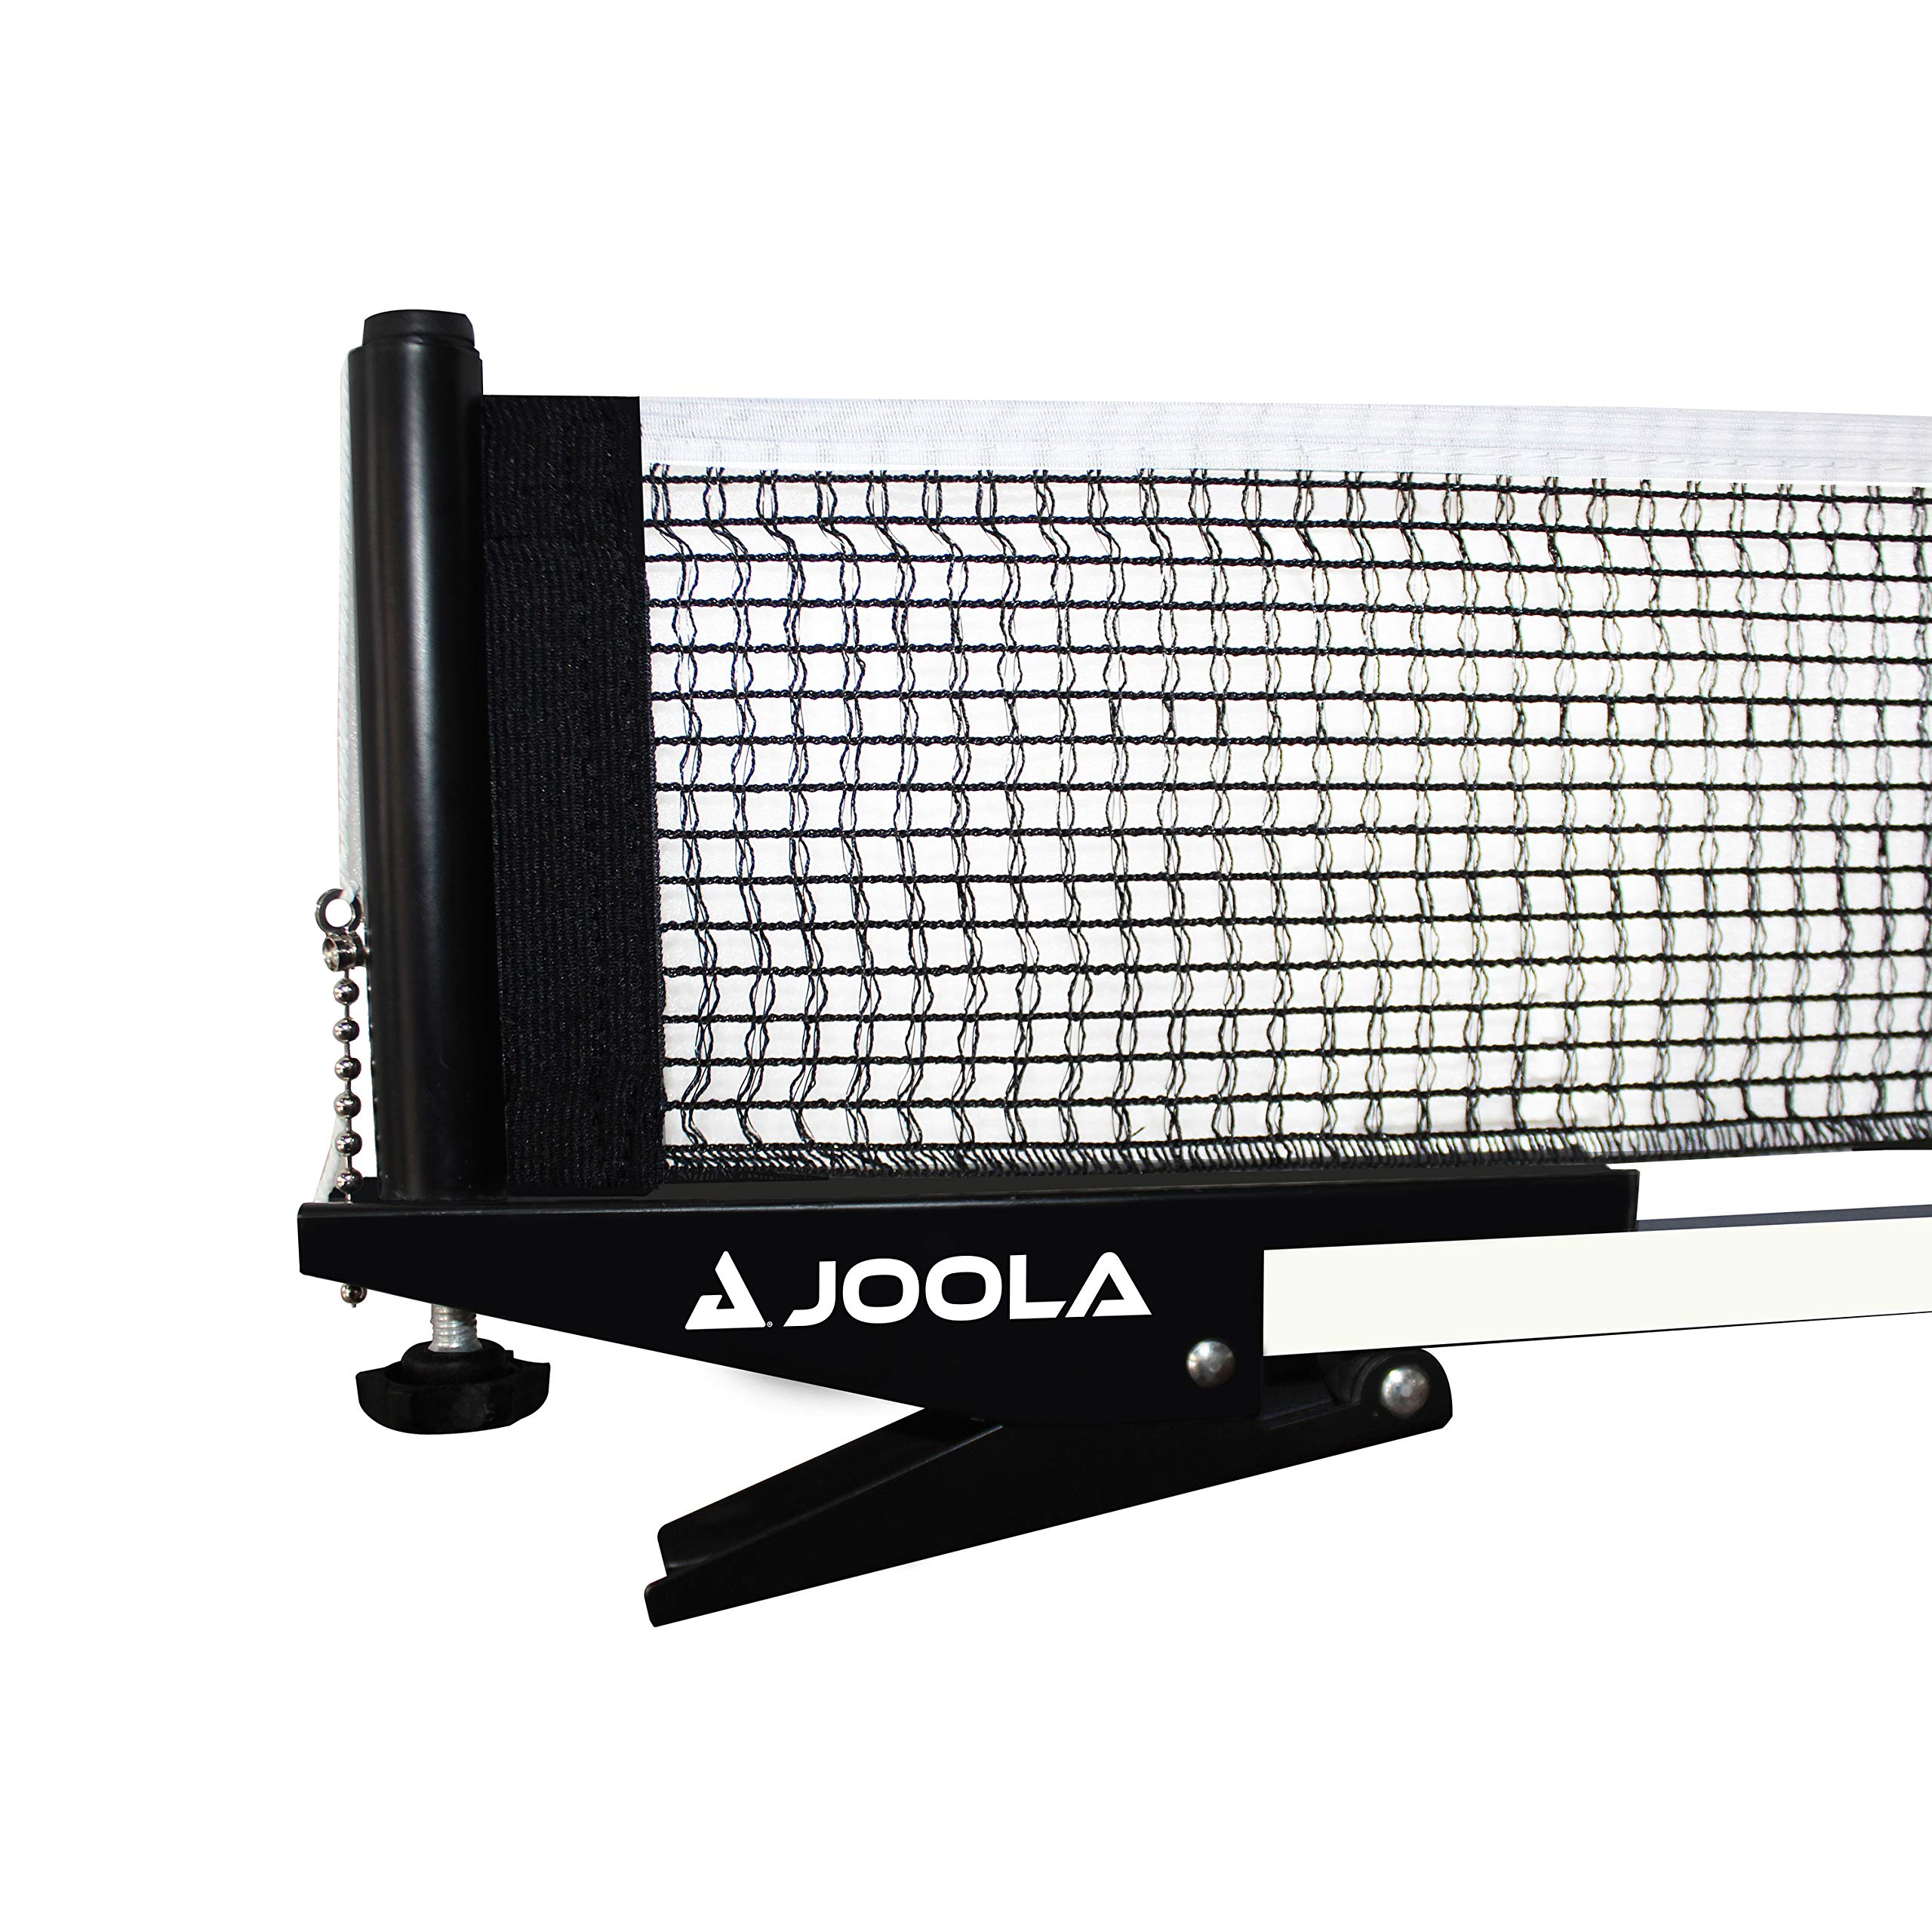 JOOLA Premium Inside Table Tennis Net and Post Set - Portable and Easy Setup 72" Regulation Size Ping Pong Spring Clamp Net, Bla